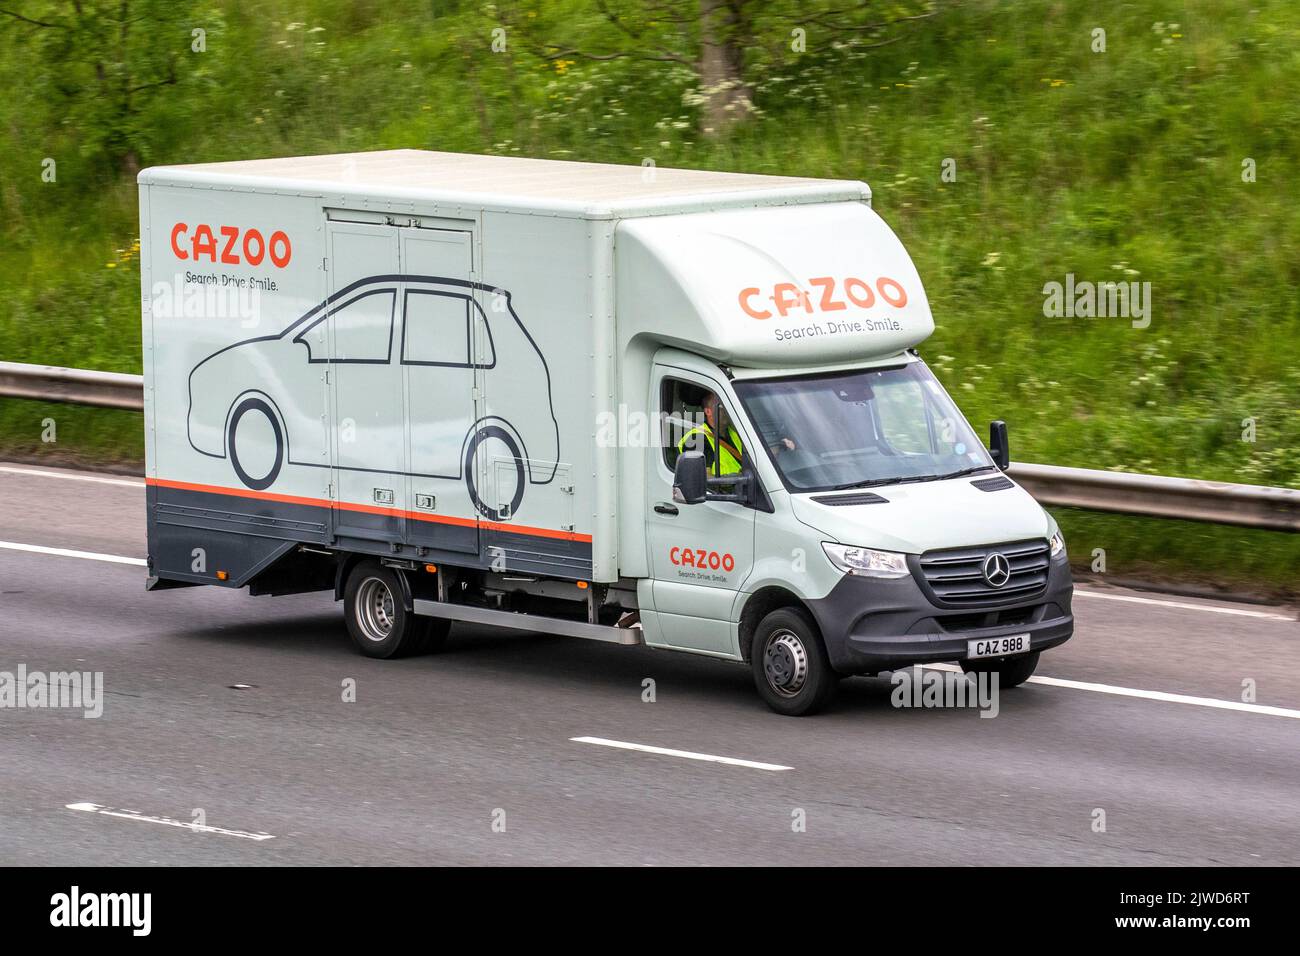 CAZOO car haulage. Mercedes Benz Sprinter 516 Cdi van; travelling on the M6 motorway, UK Stock Photo